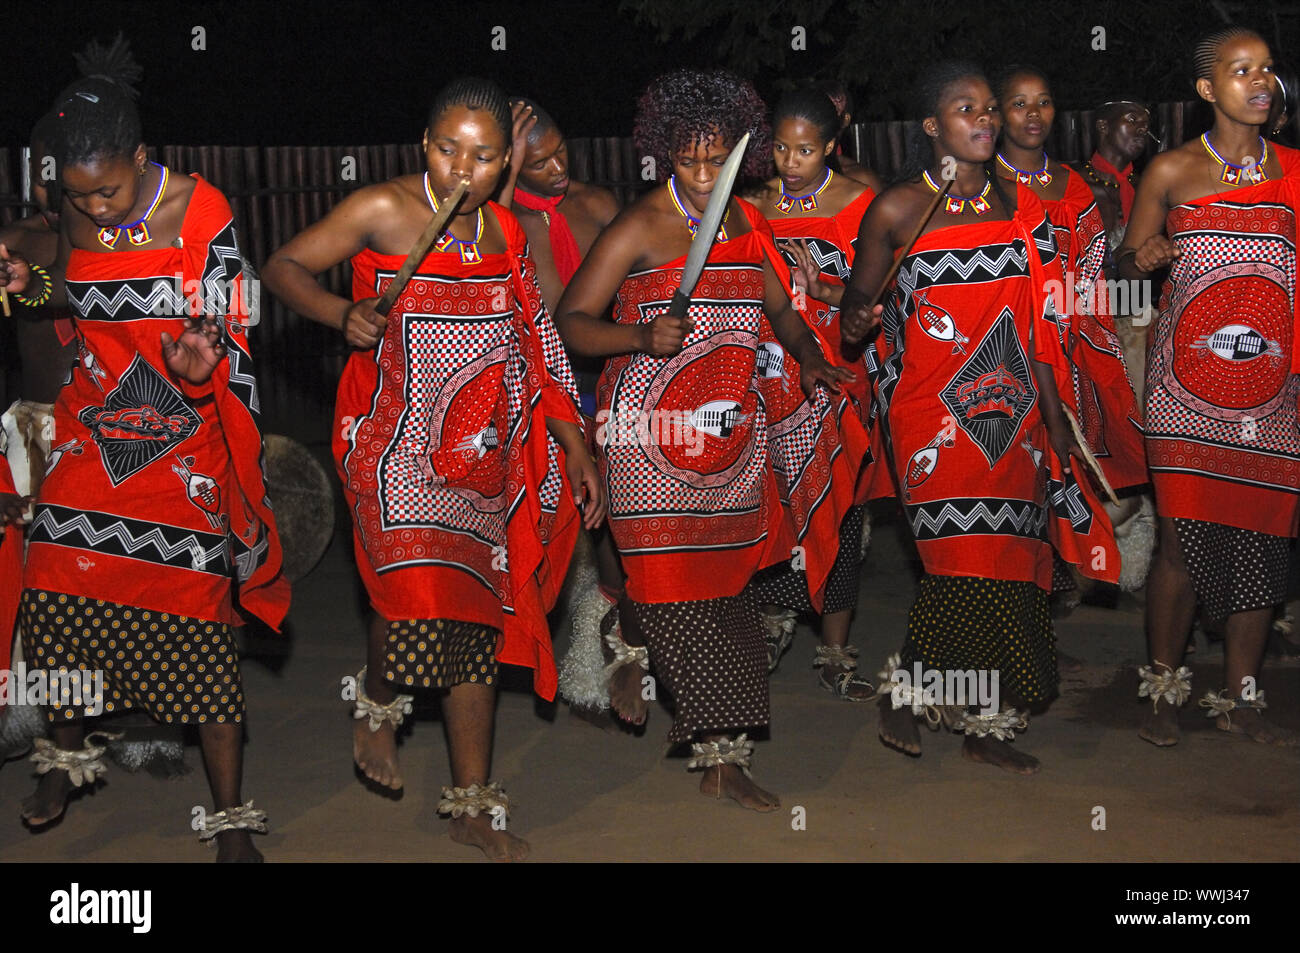 African Women's Dance Group Stock Photo